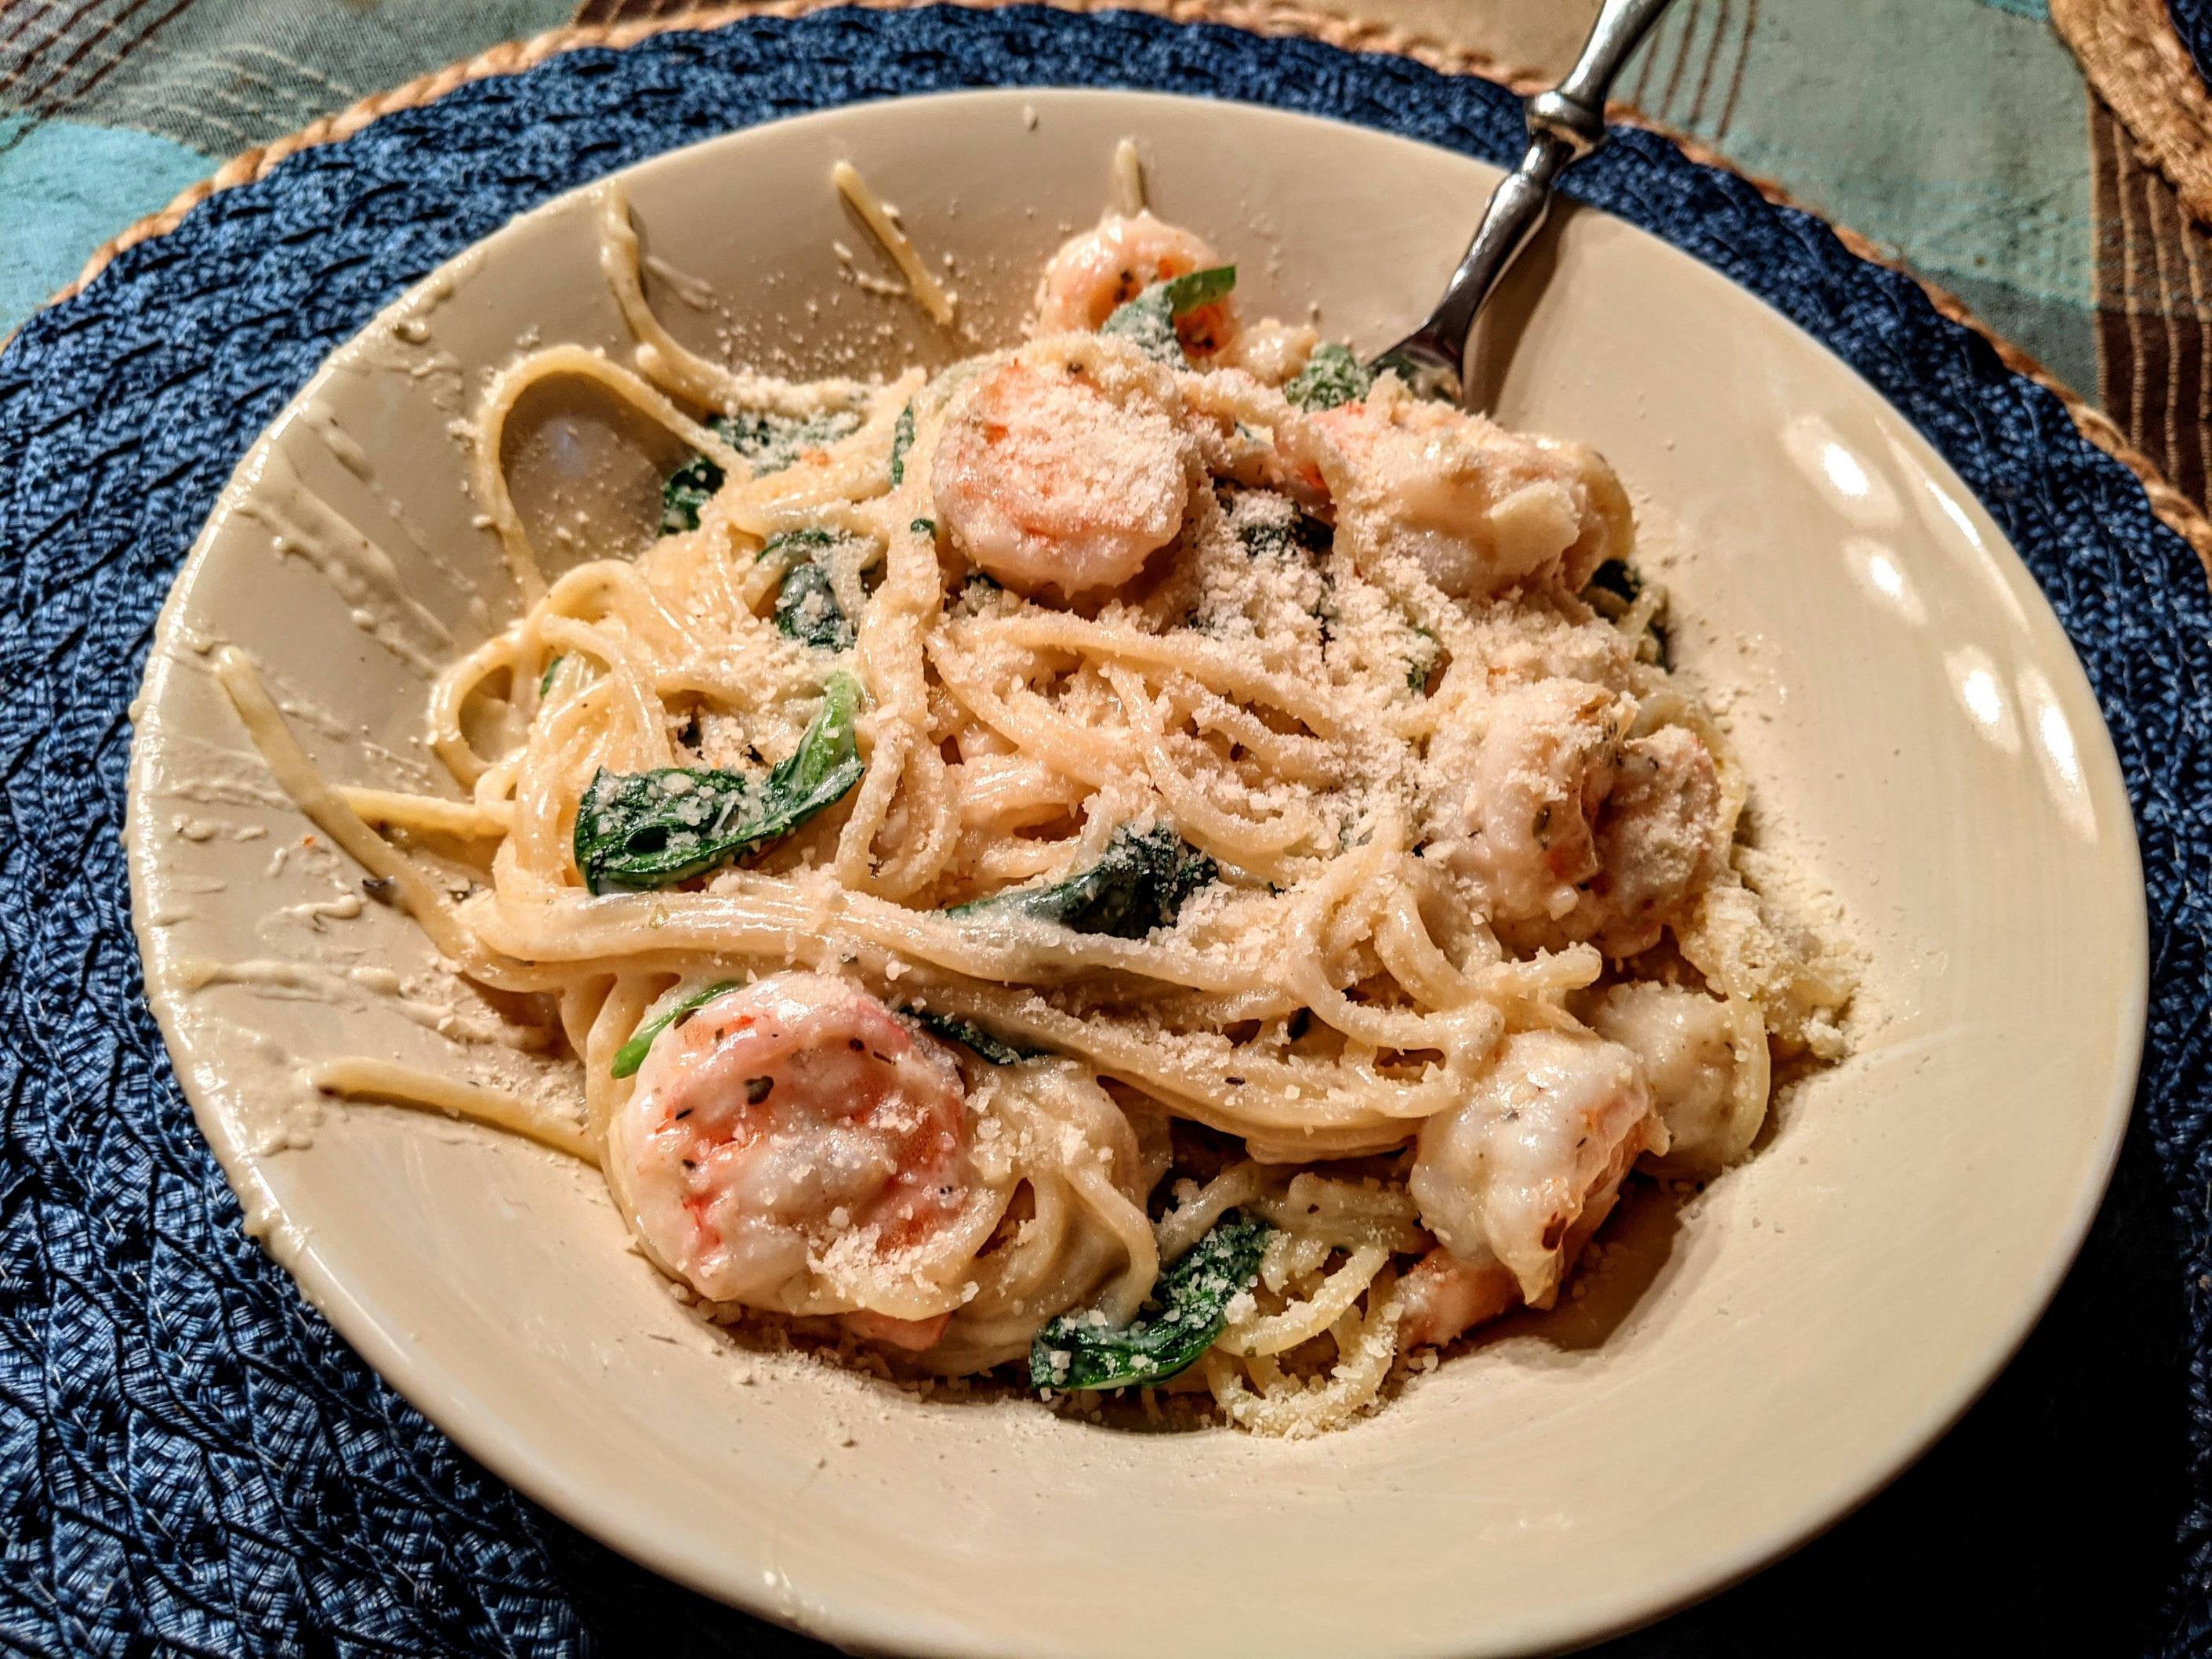 Shrimp and bay scallop pasta in a garlic and white wine cream sauce ...